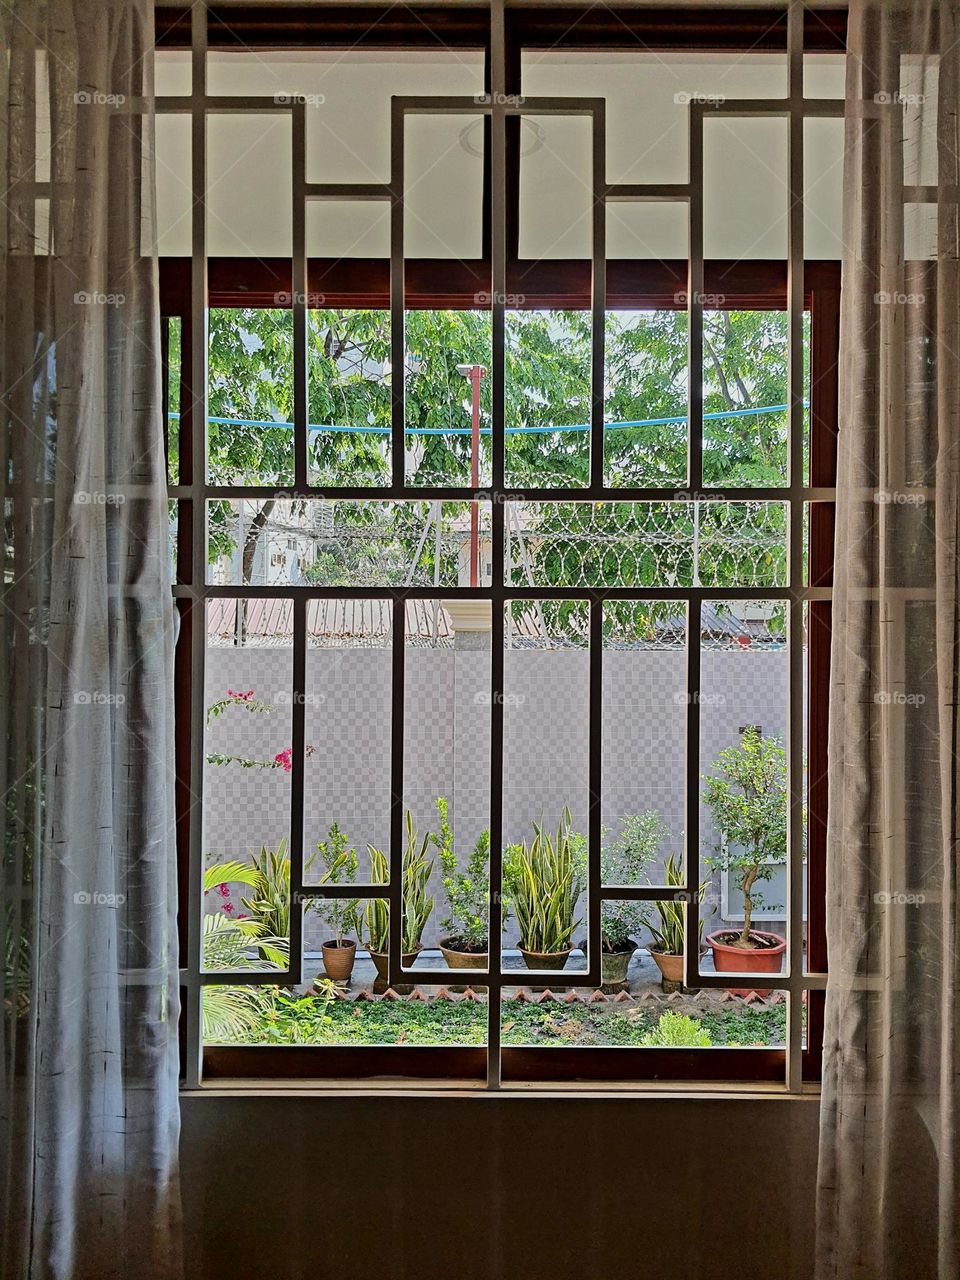 Window with rectangular design iron grill